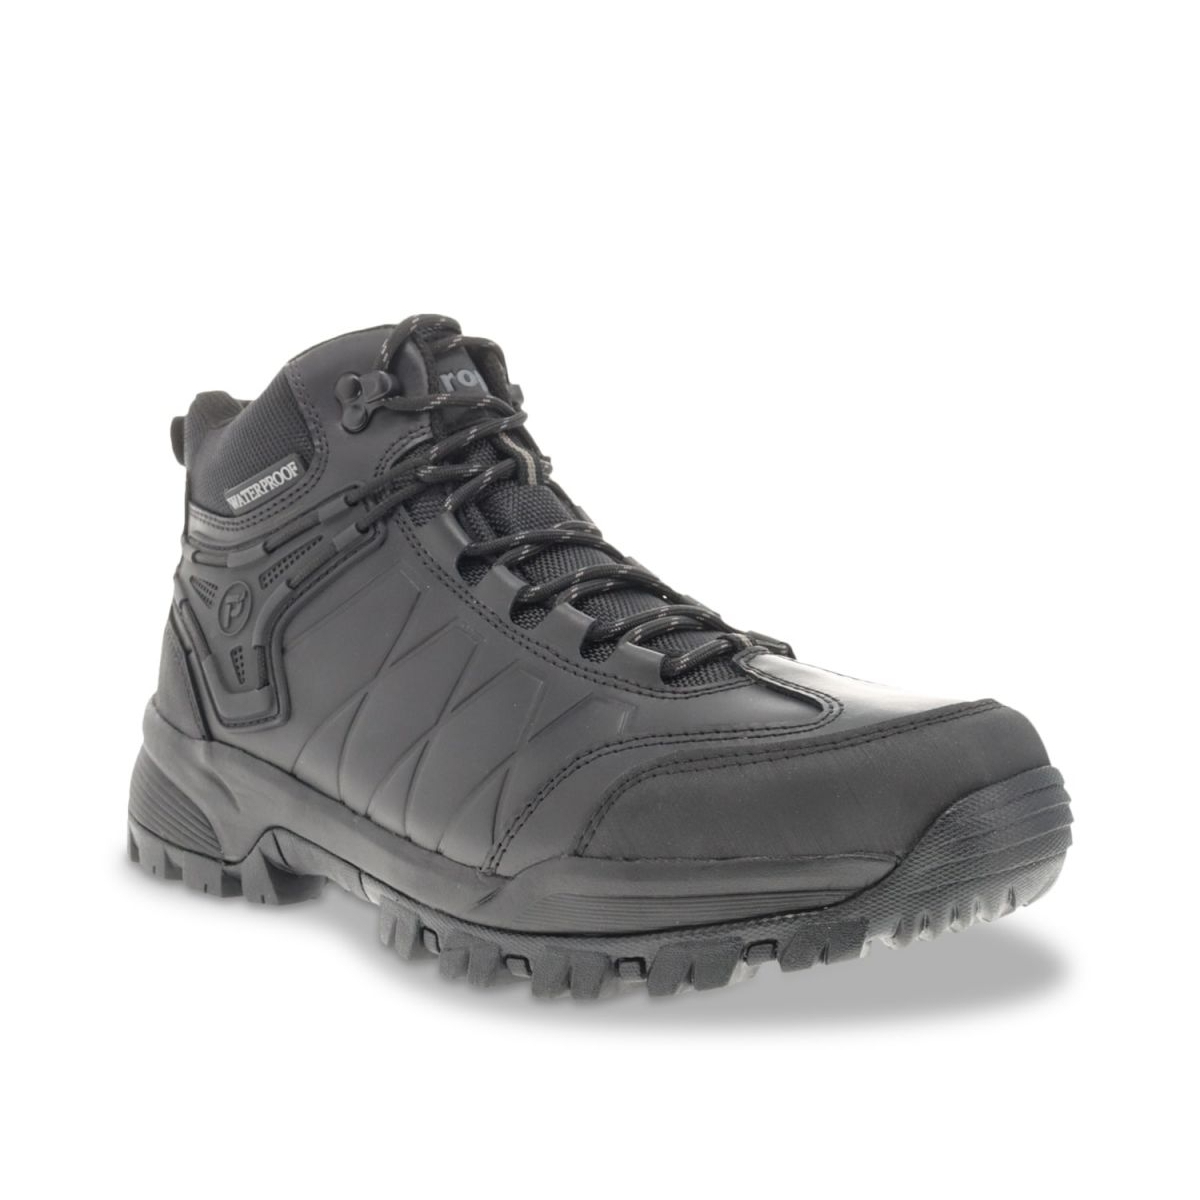 Propet Men's Ridge Walker Force Hiking Boots Black - MBA052LBLK BLACK - BLACK, 8 X-Wide